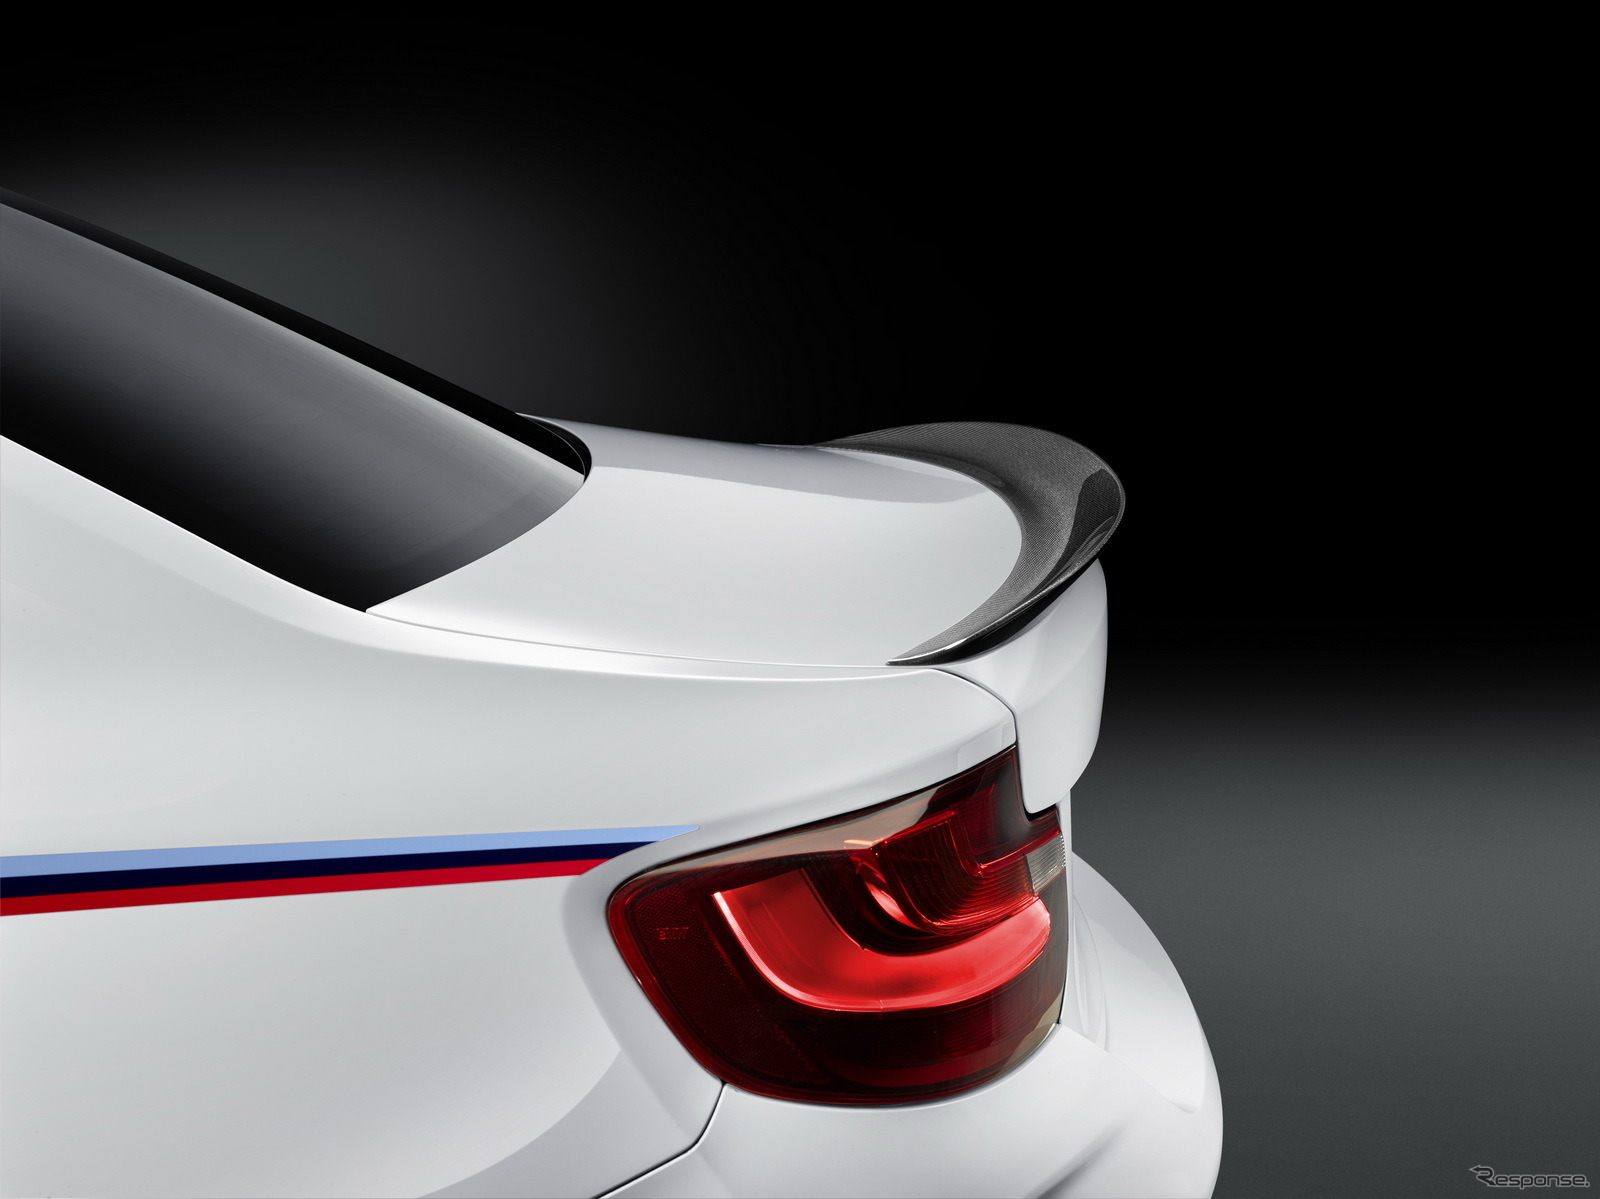 BMW M2クーペのMパフォーマンスパーツ